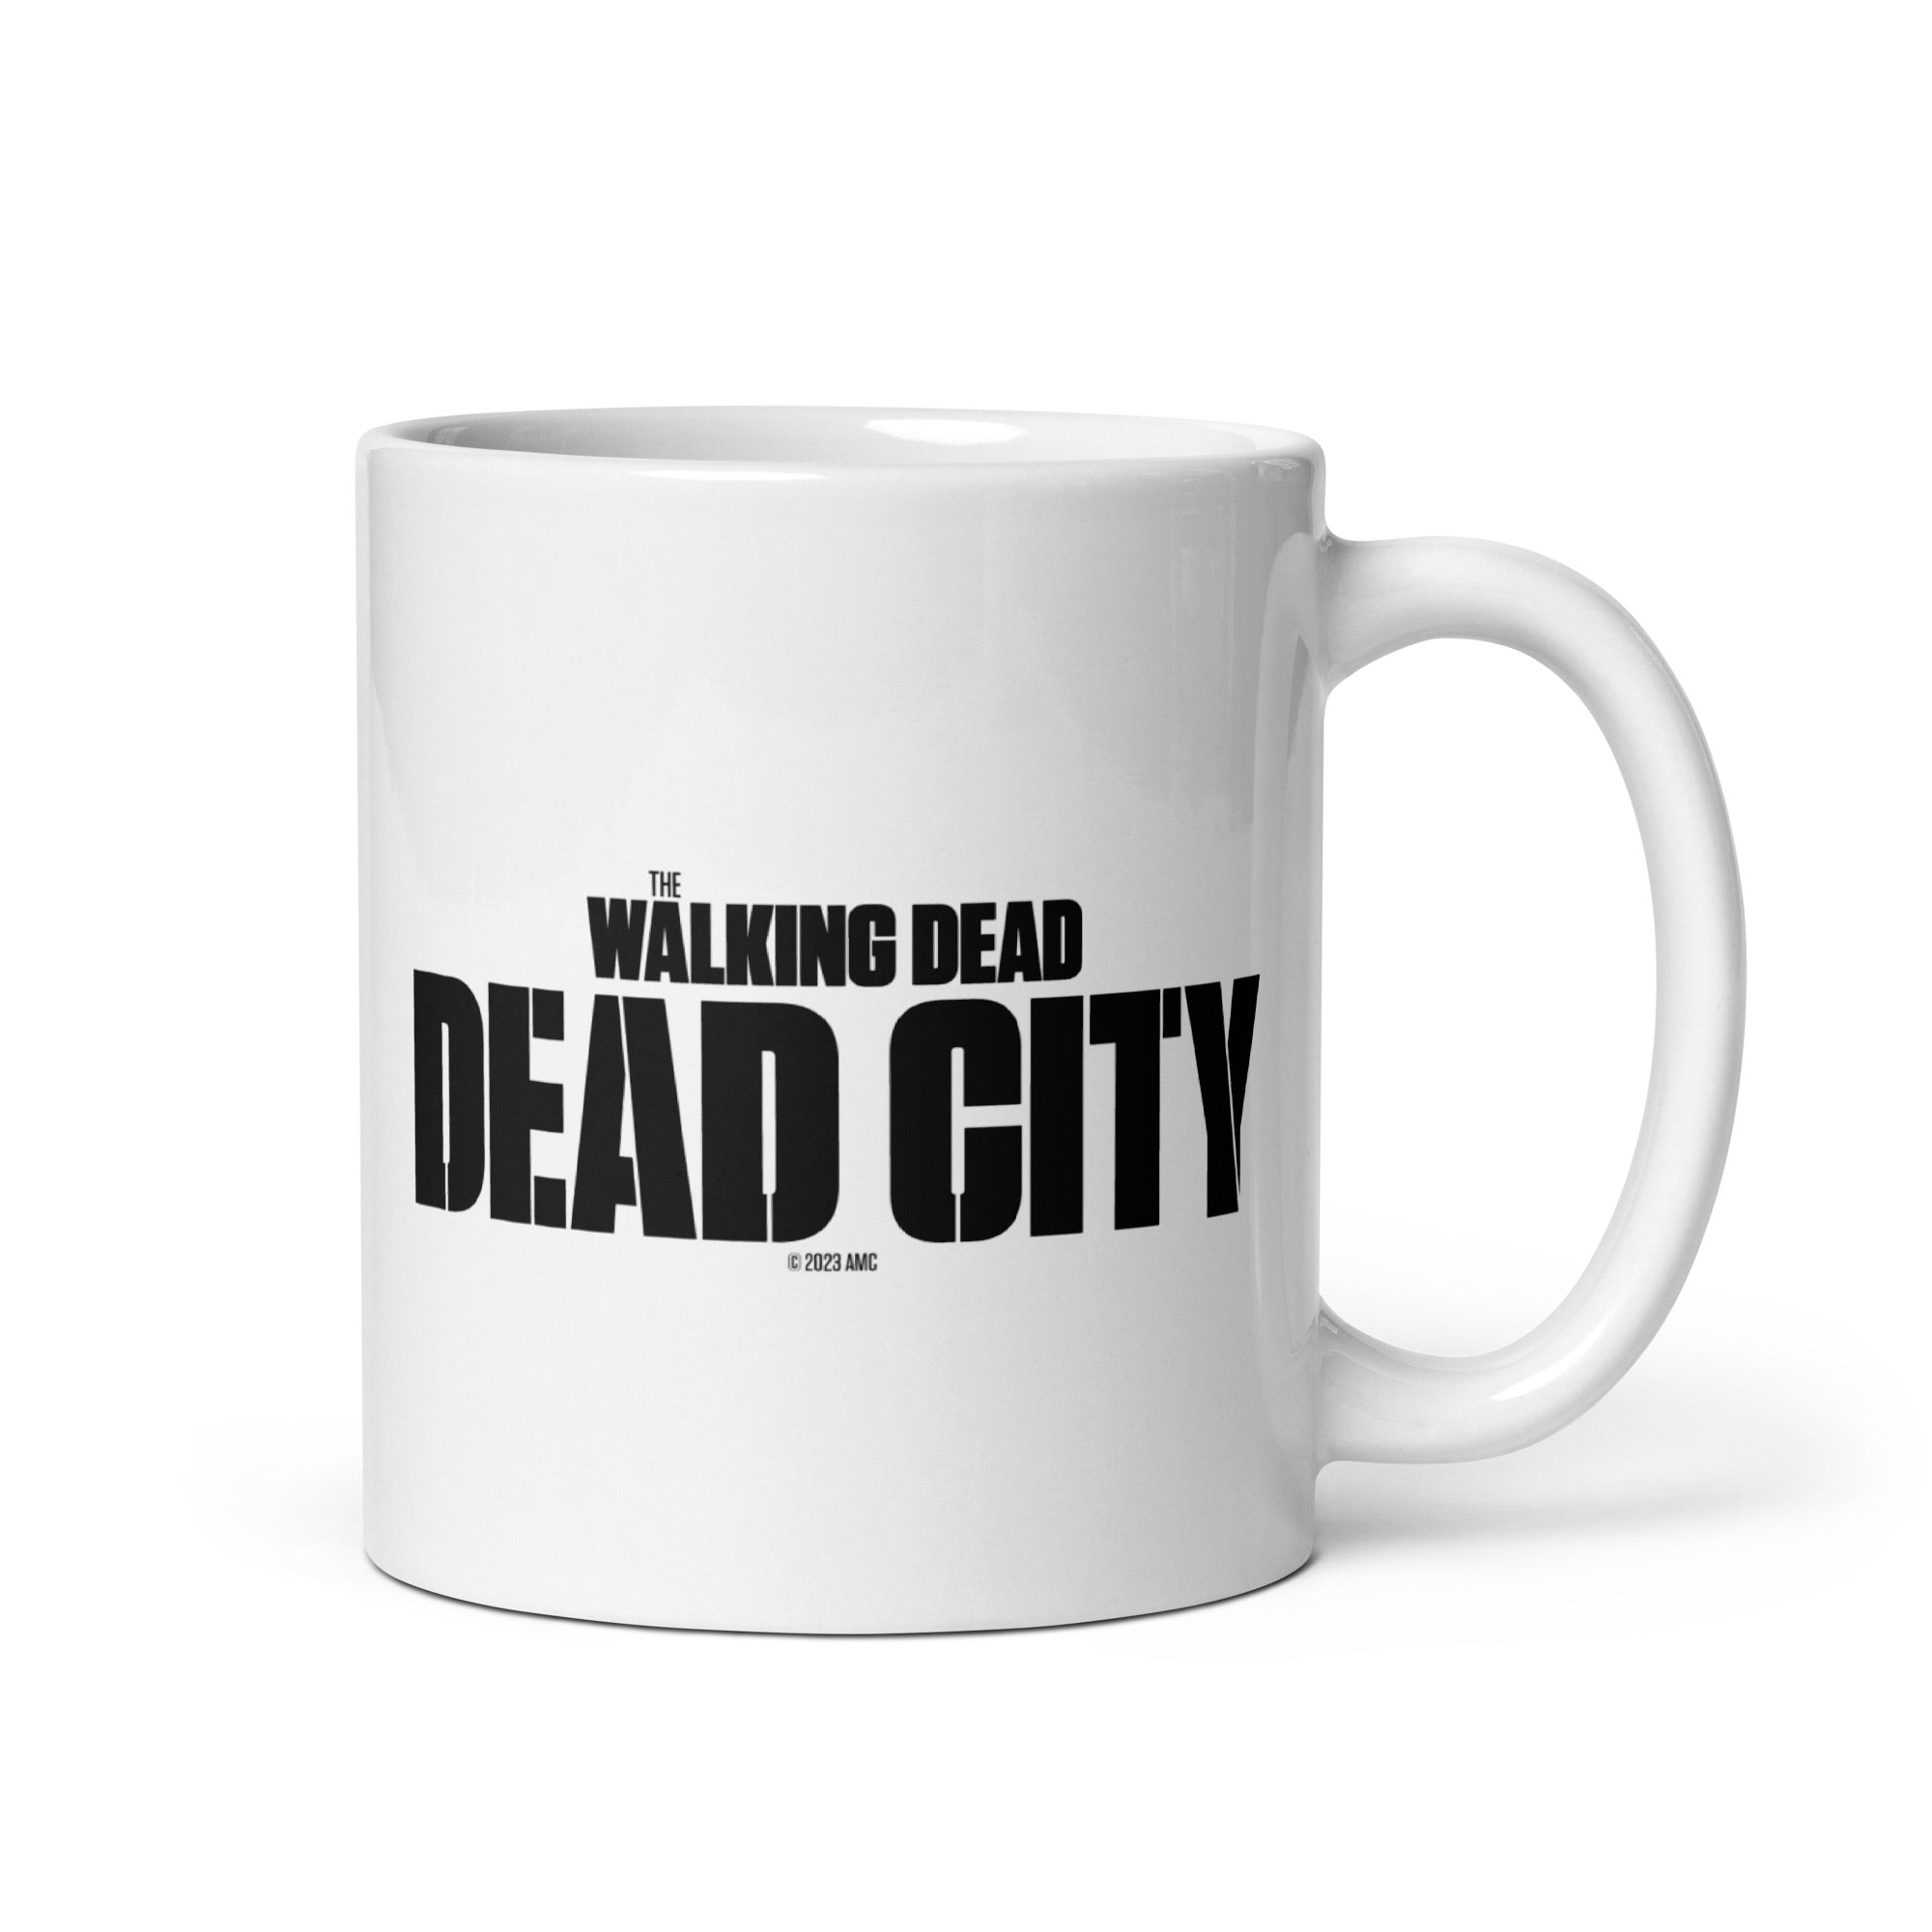 Dead City Dead City NYC Mug-1